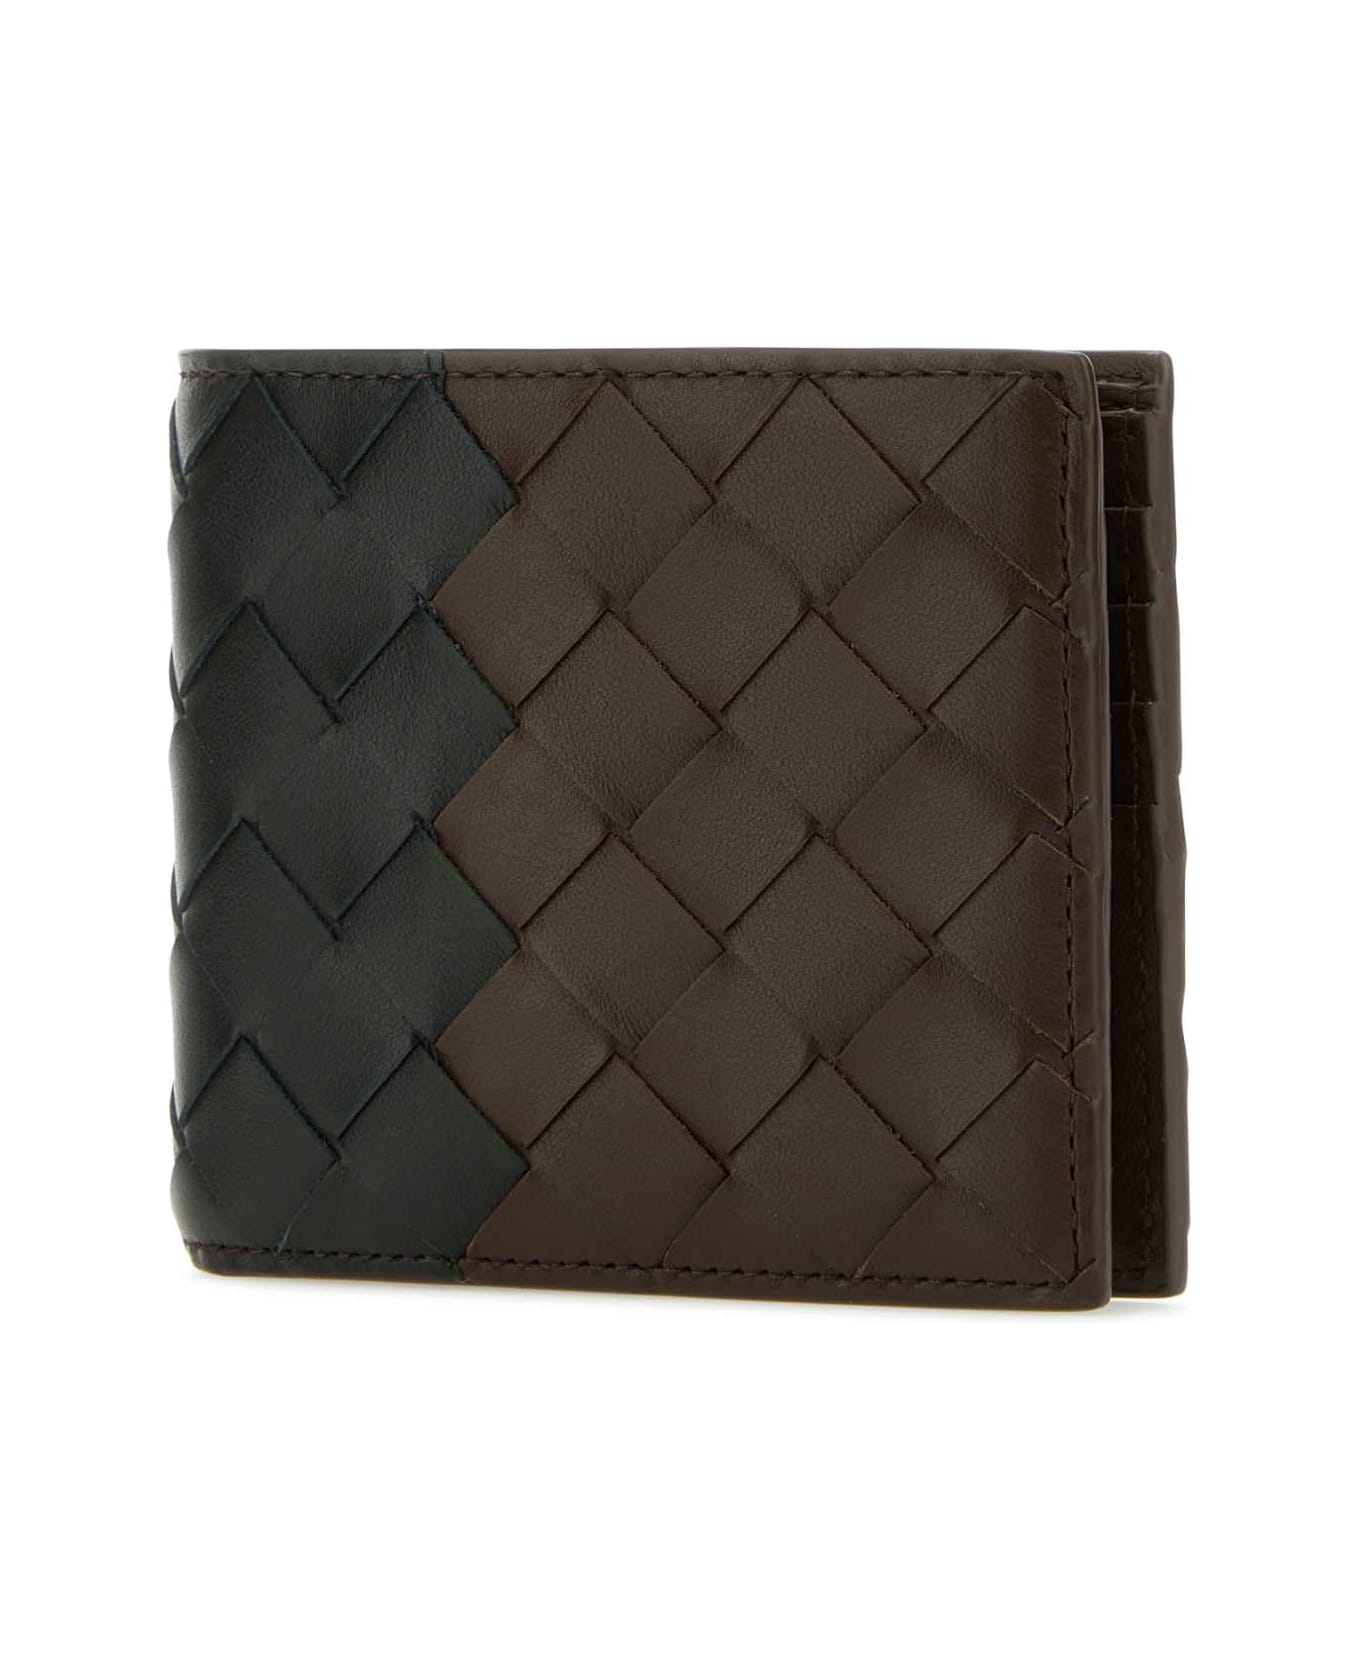 Bottega Veneta Two-tone Leather Wallet - MULTICOLOR